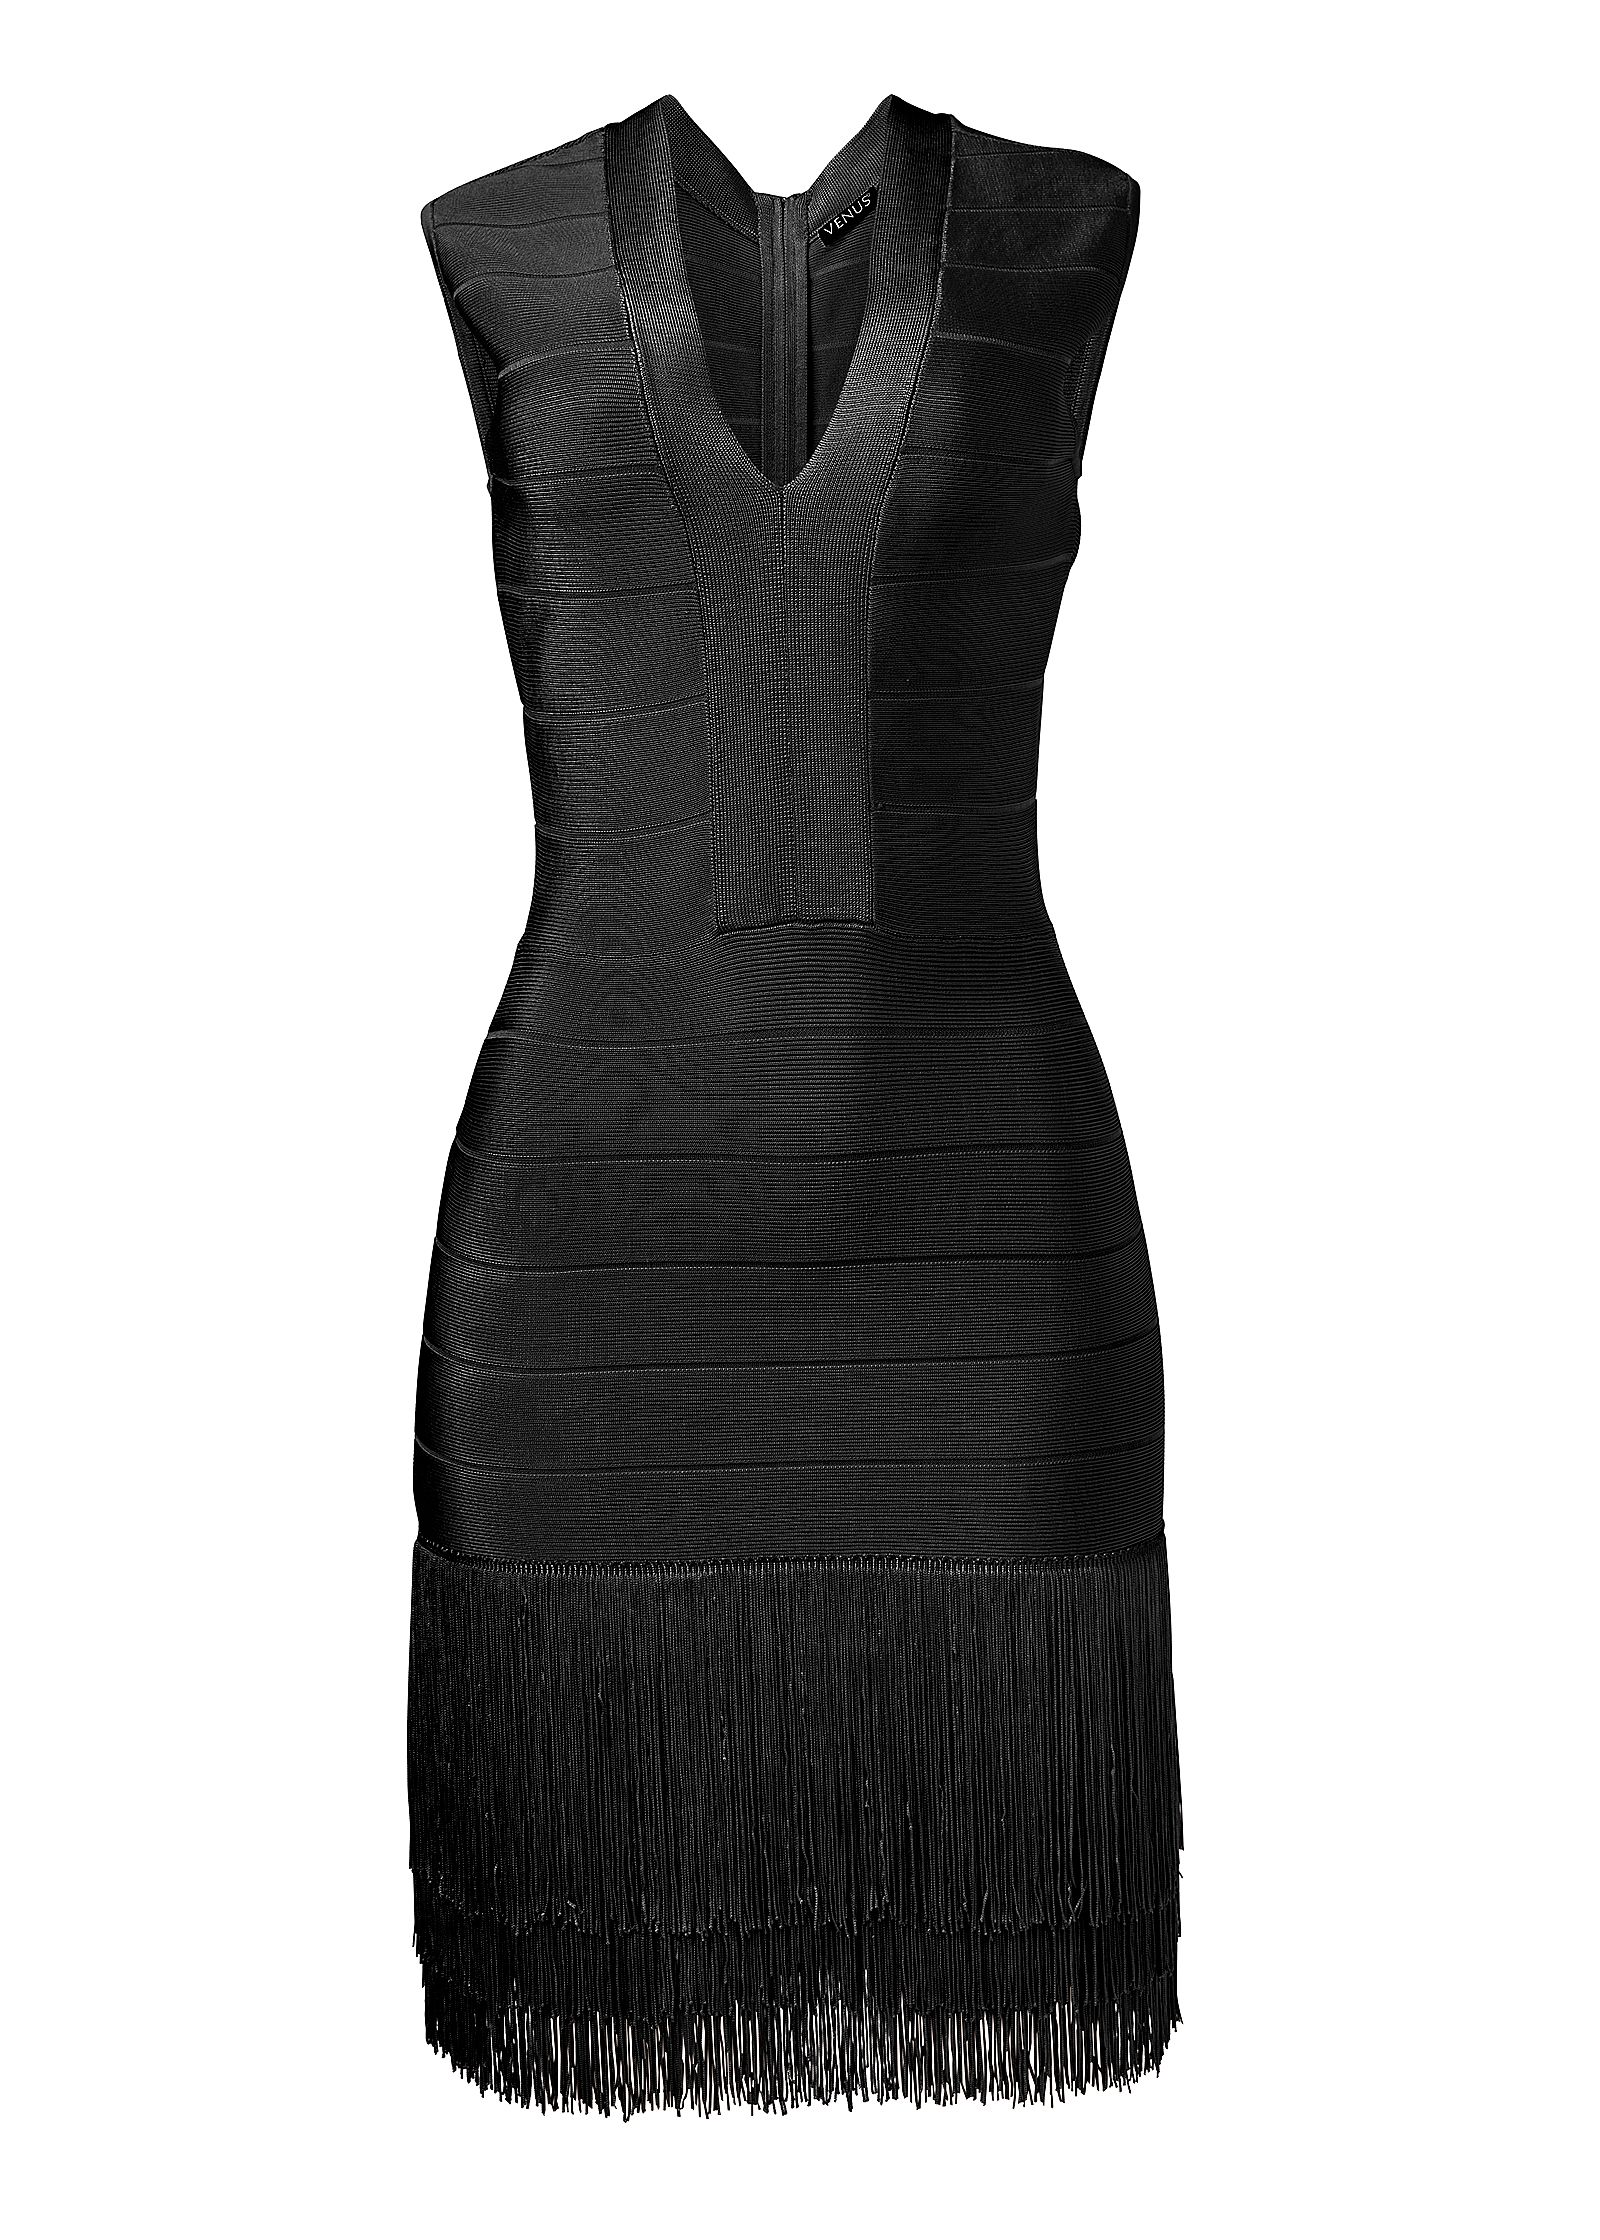 venus black fringe dress